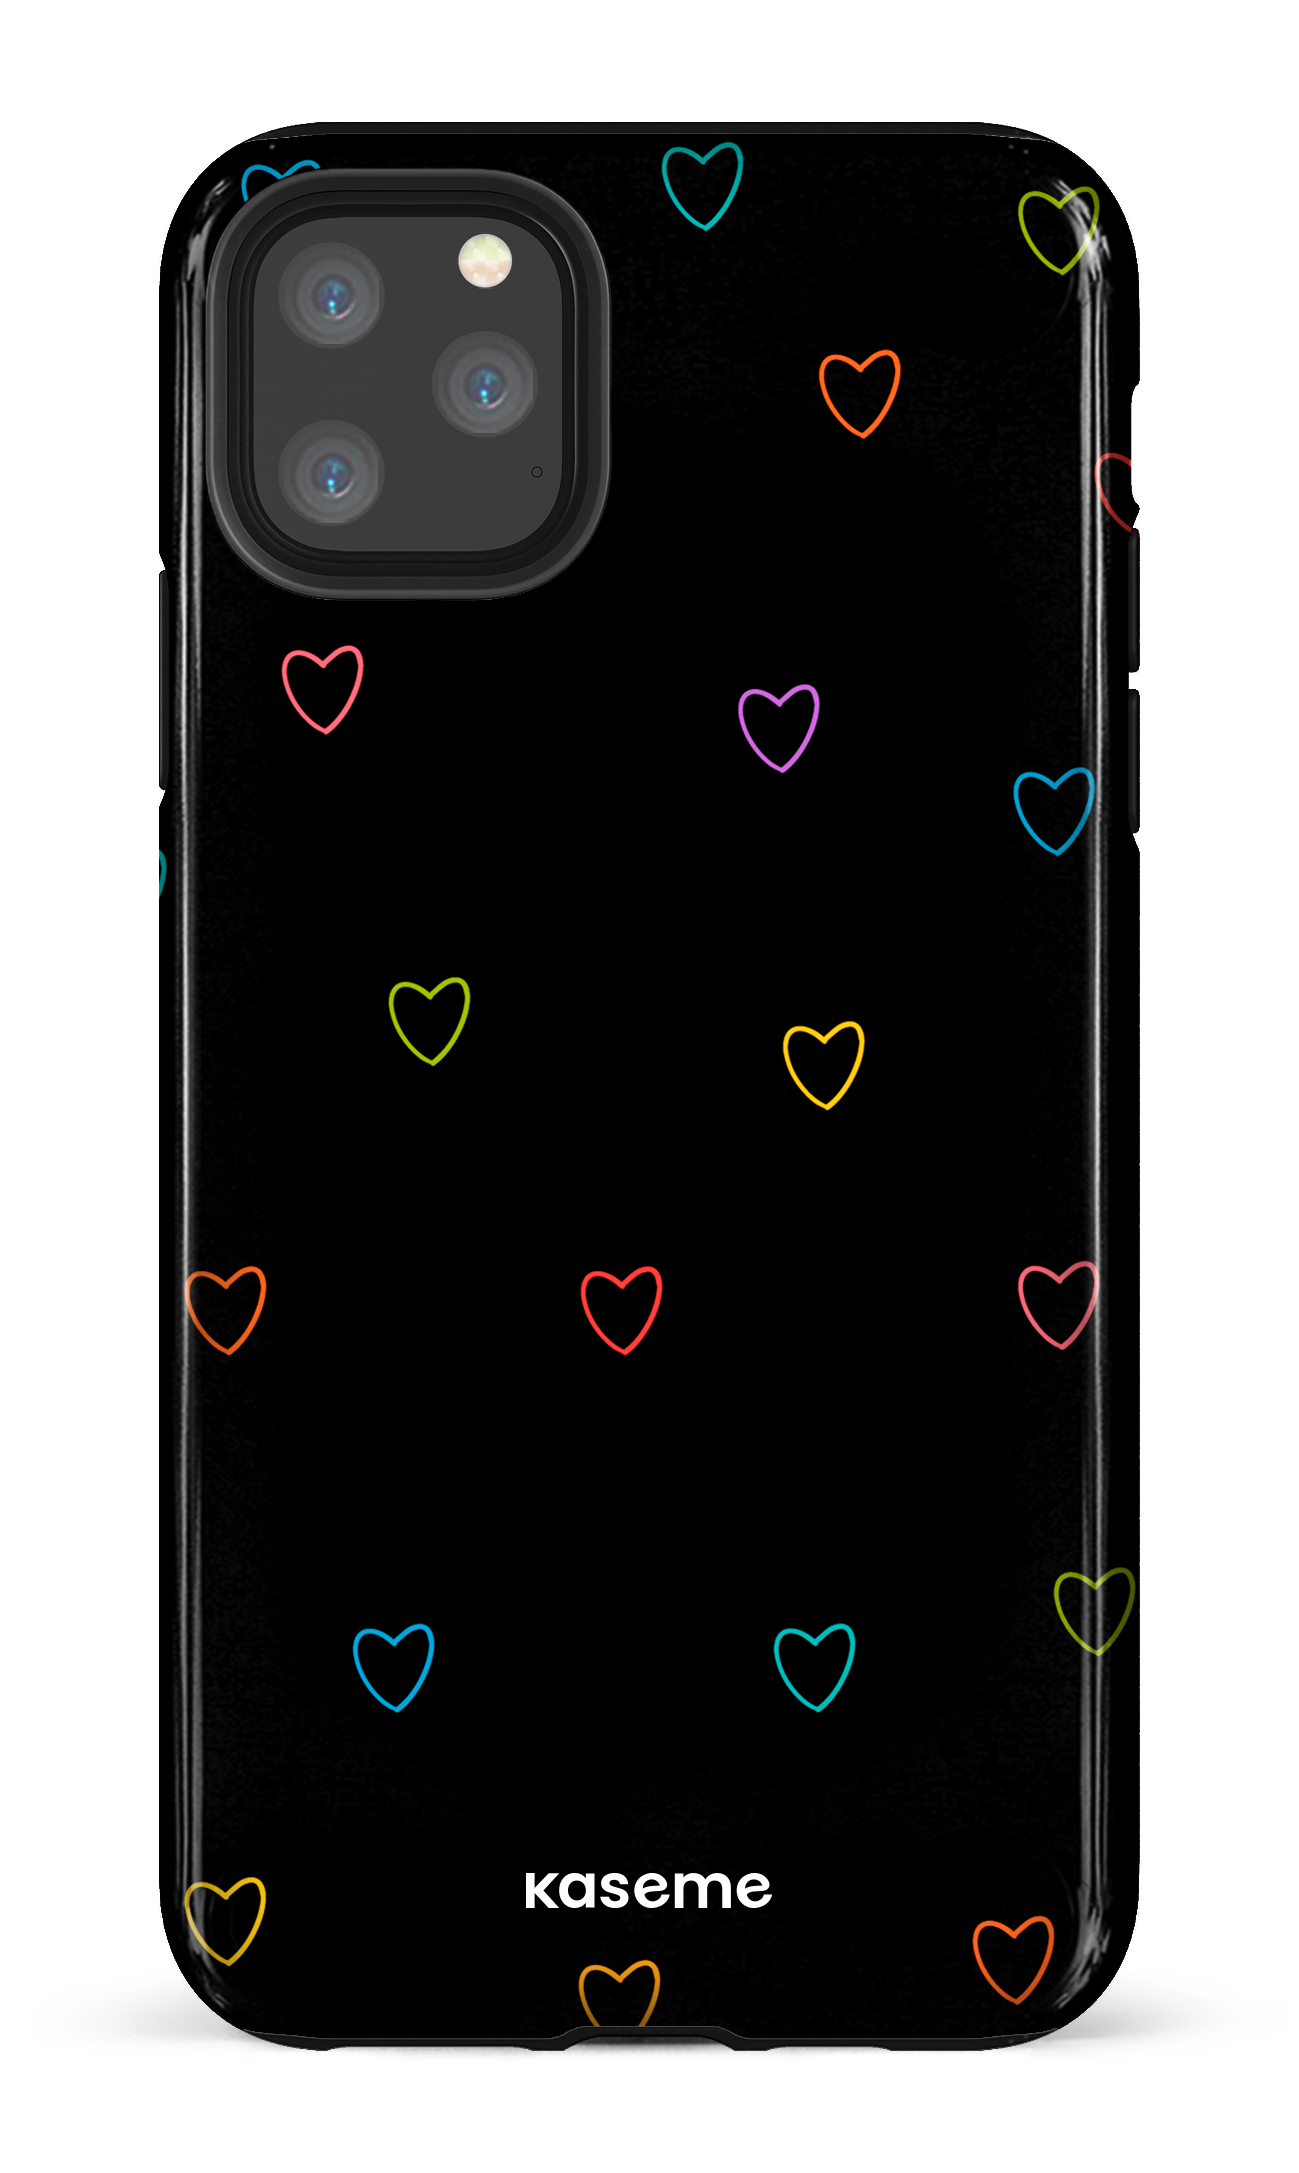 Love Wins - iPhone 11 Pro Max